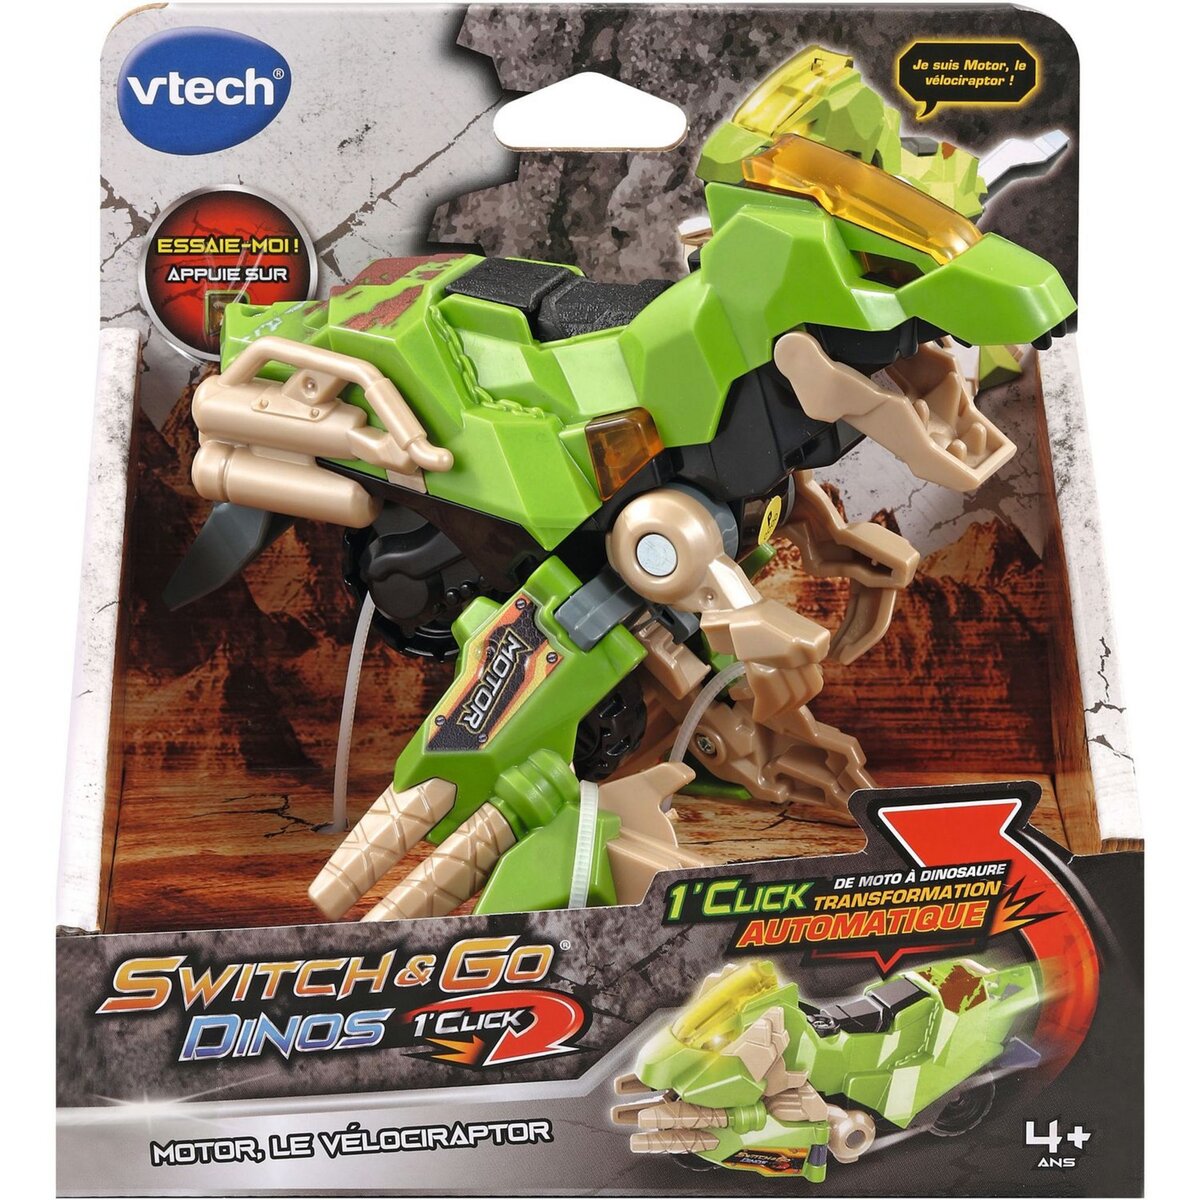 VTech Switch & Go Dinos 1